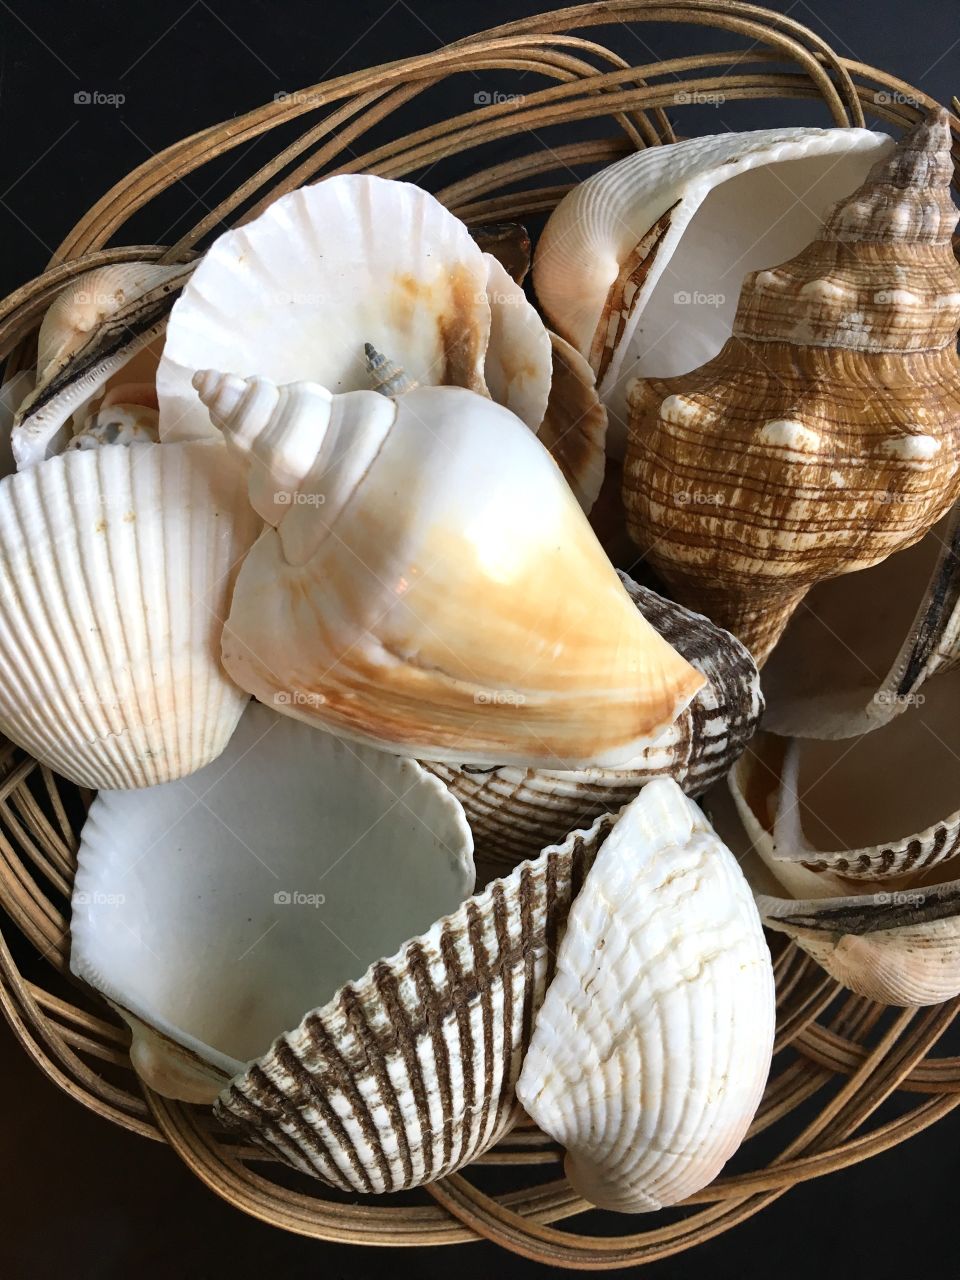 Seashell wishes